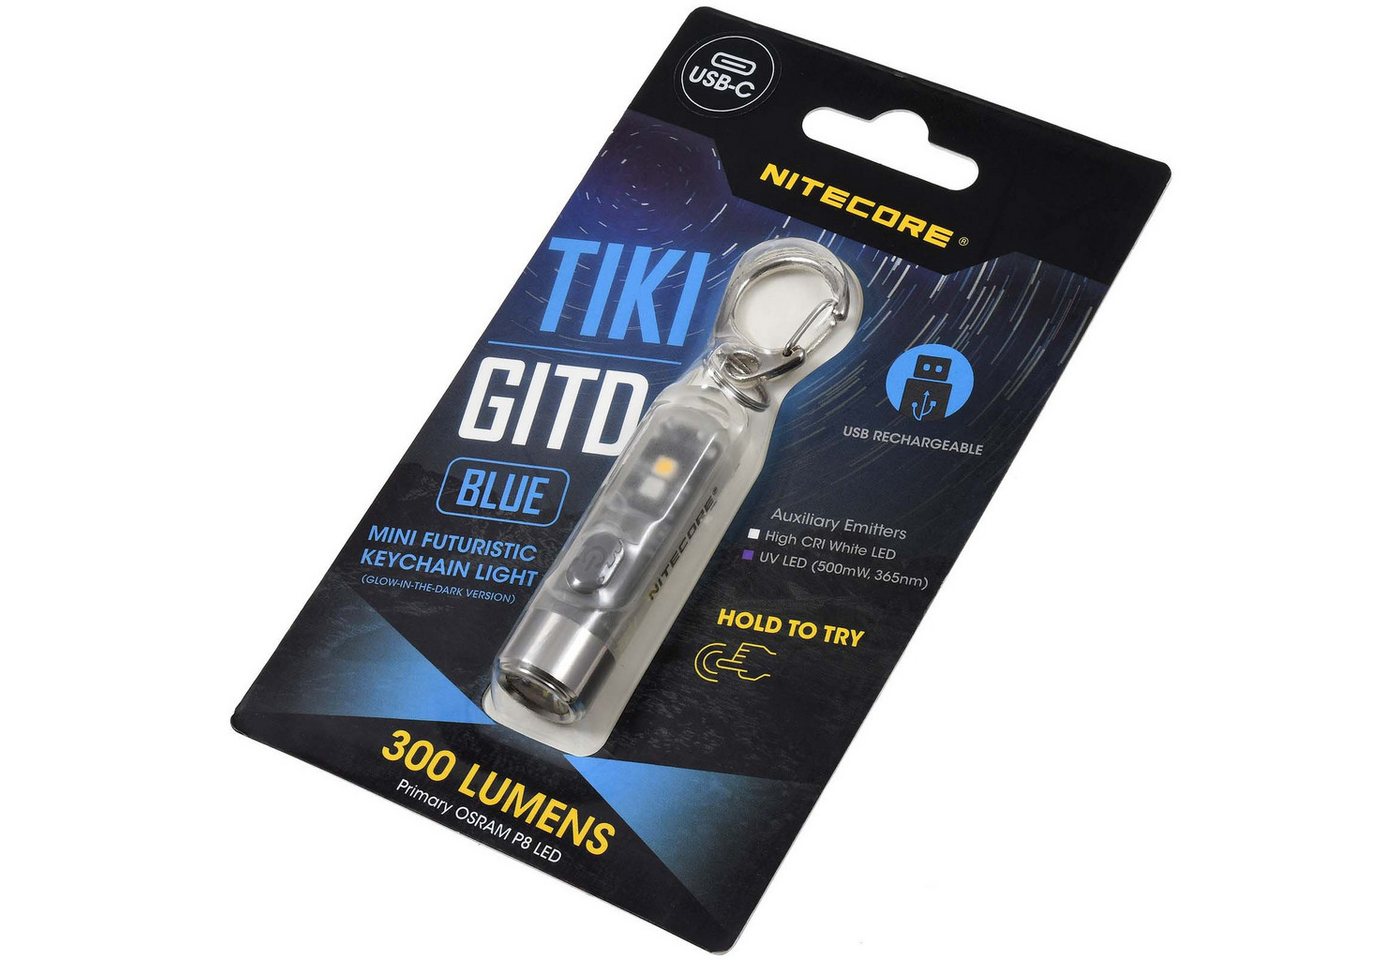 Nitecore LED Taschenlampe TIKI GITD - Glow in the Dark, Blau, mit Micro-USB von Nitecore